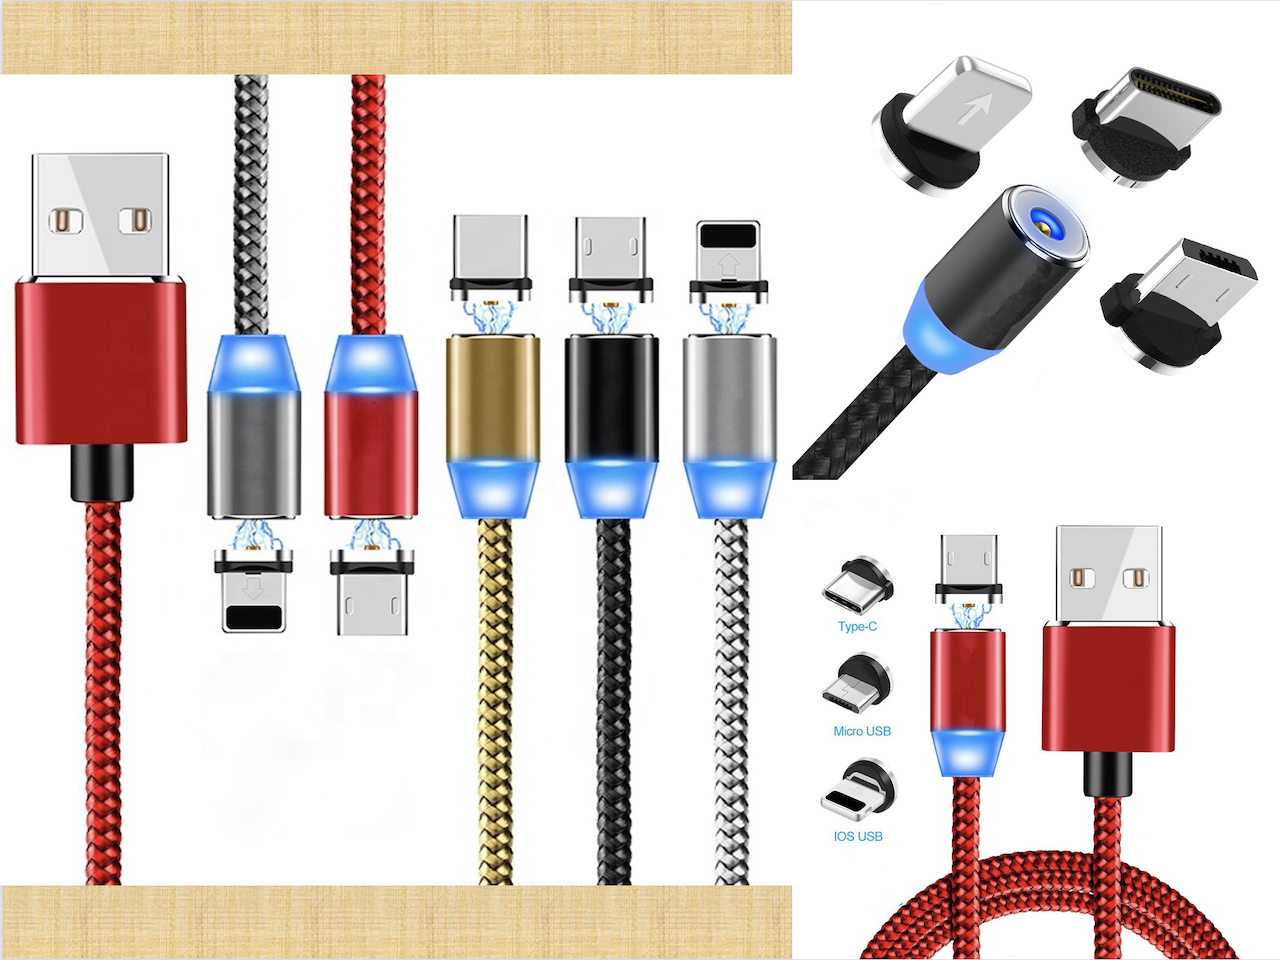 Cable de carga rápida magnético 3 en 1 Micro USB tipo C para Android iPhone